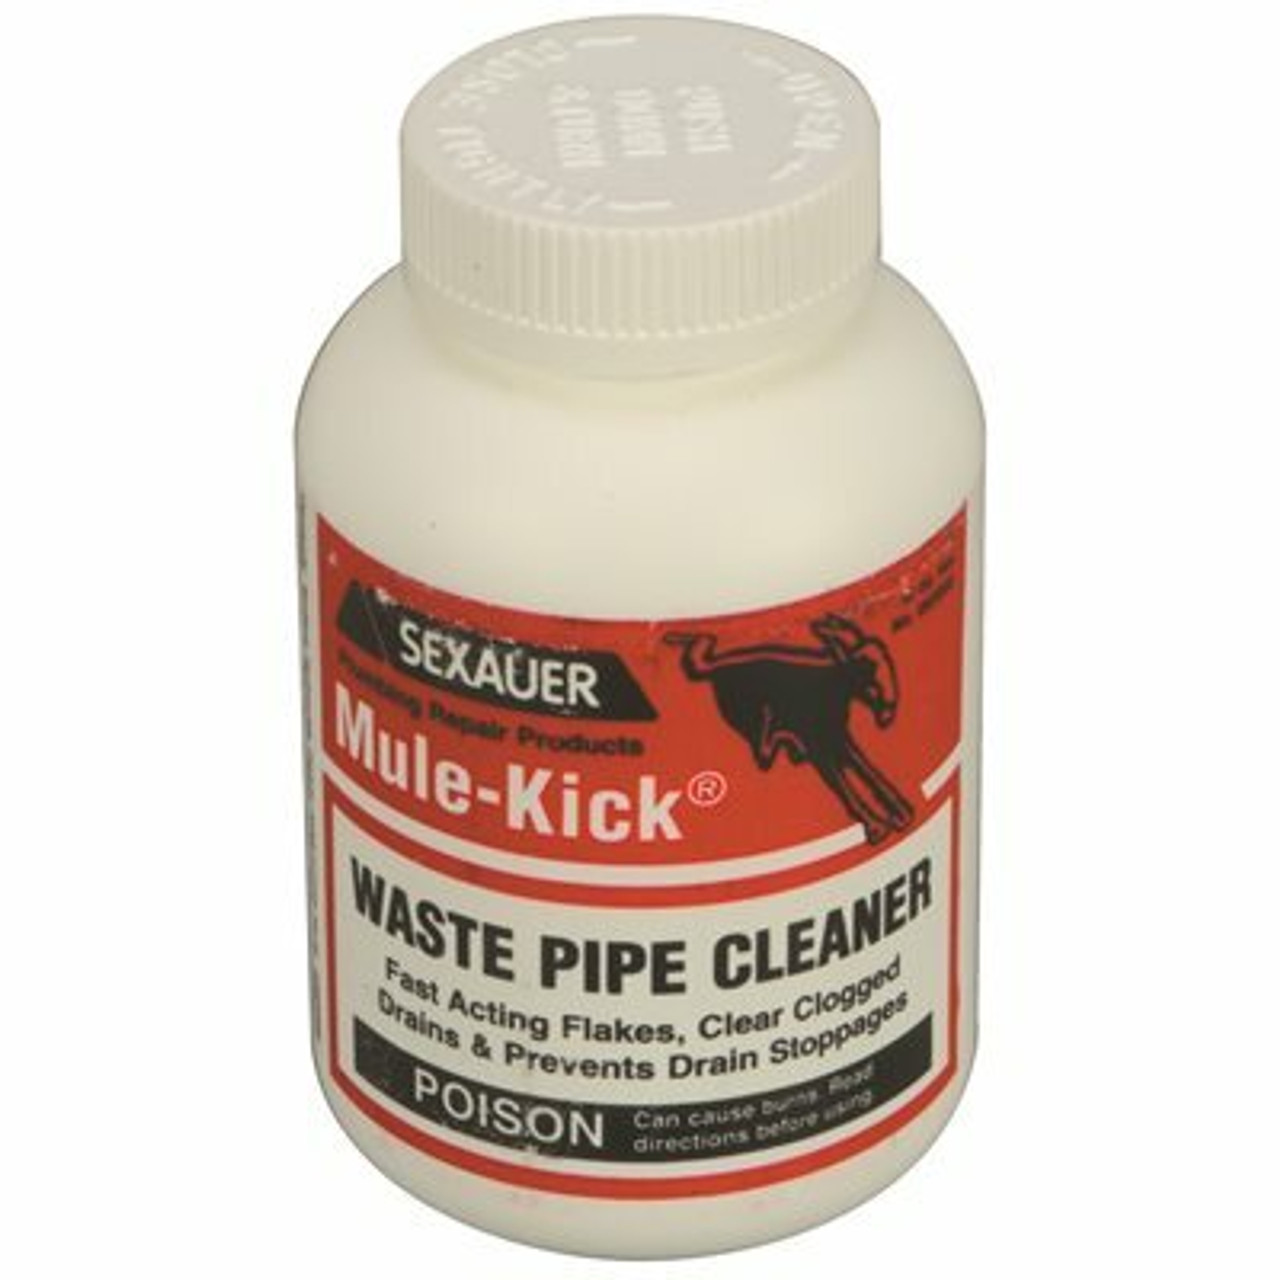 National Brand Alternative Mule Kick Waste Pipe Cleaner, 12 Oz., 24 Per Case